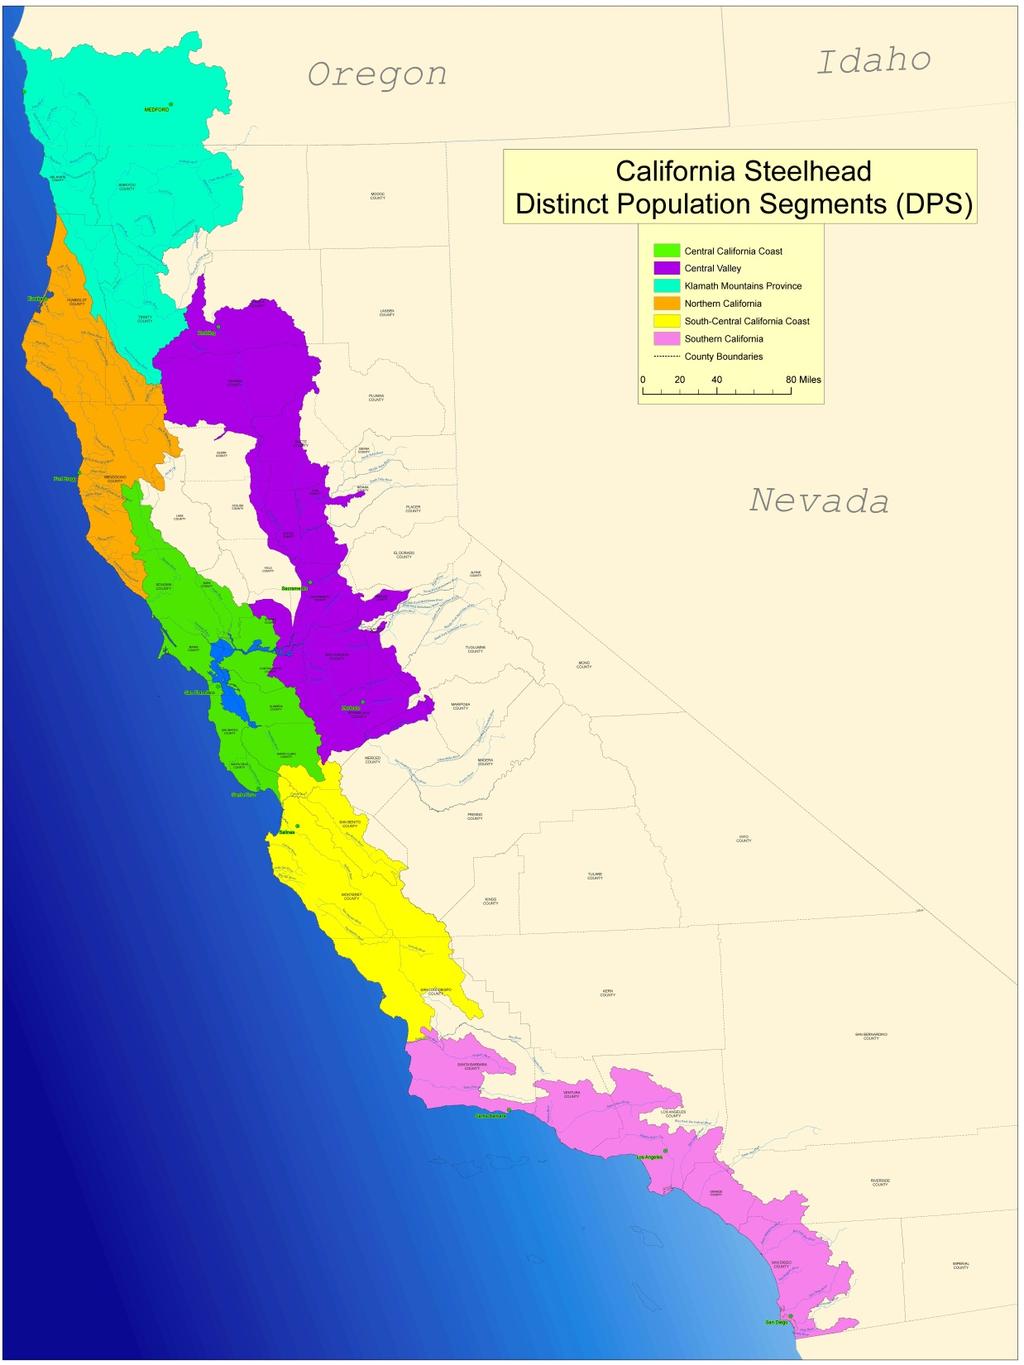 California Steelhead Distinct Population Segments (DPS) Klamath Mountains Province Klamath Mountains Province Status: Not warranted (2001) Northern California Status: Threatened (2000) Central